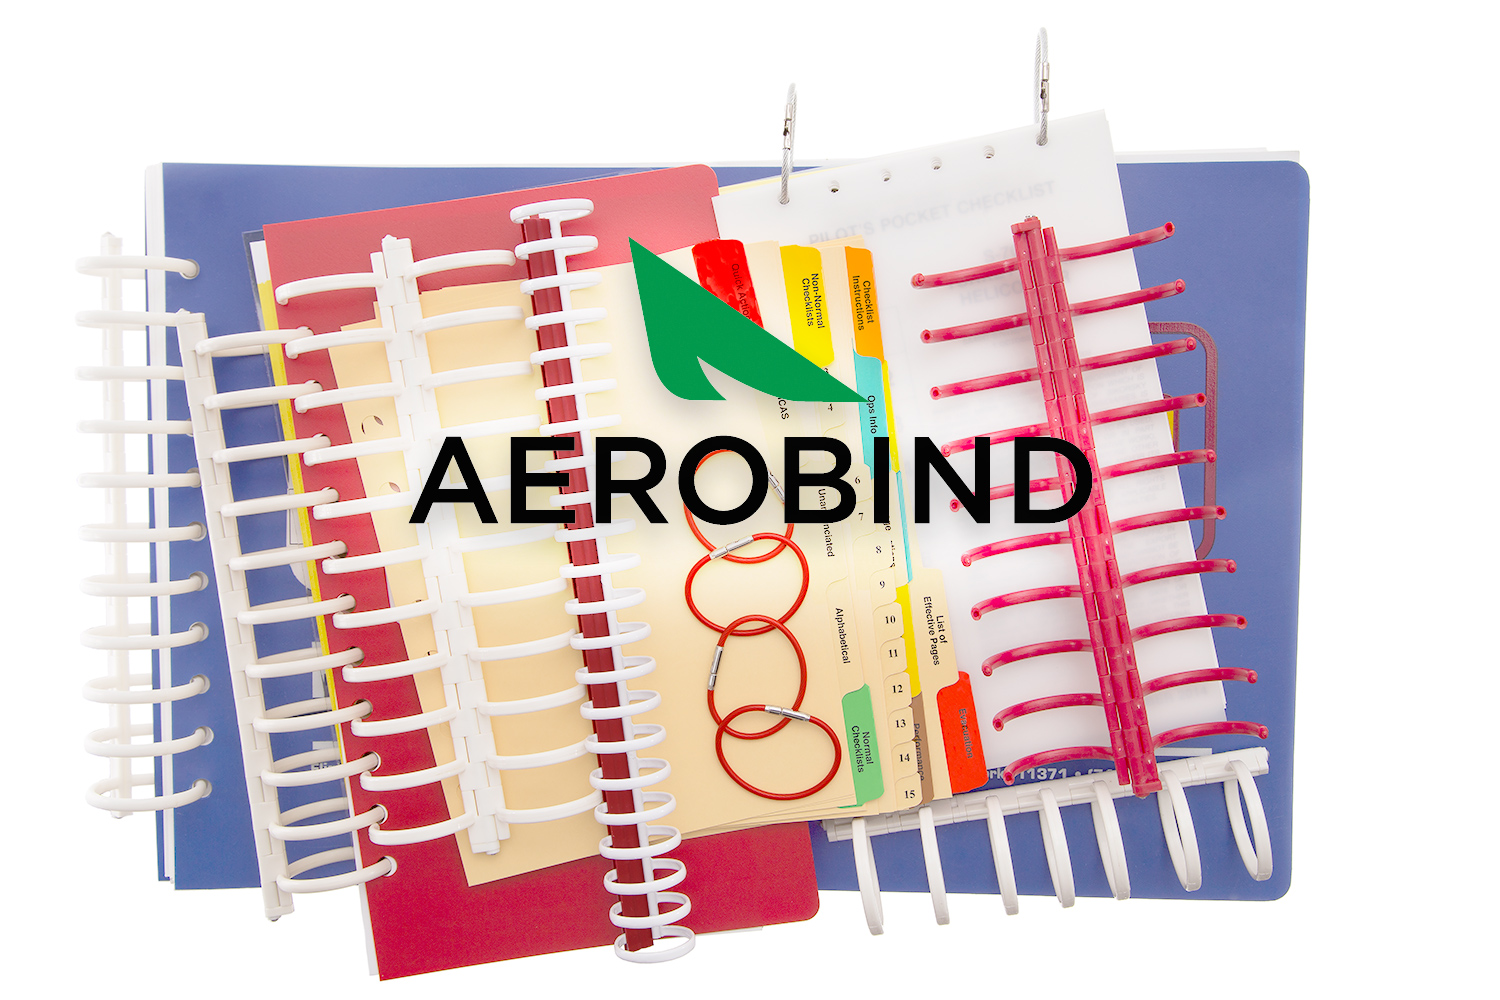 Aerobind Pilot checklist supplies